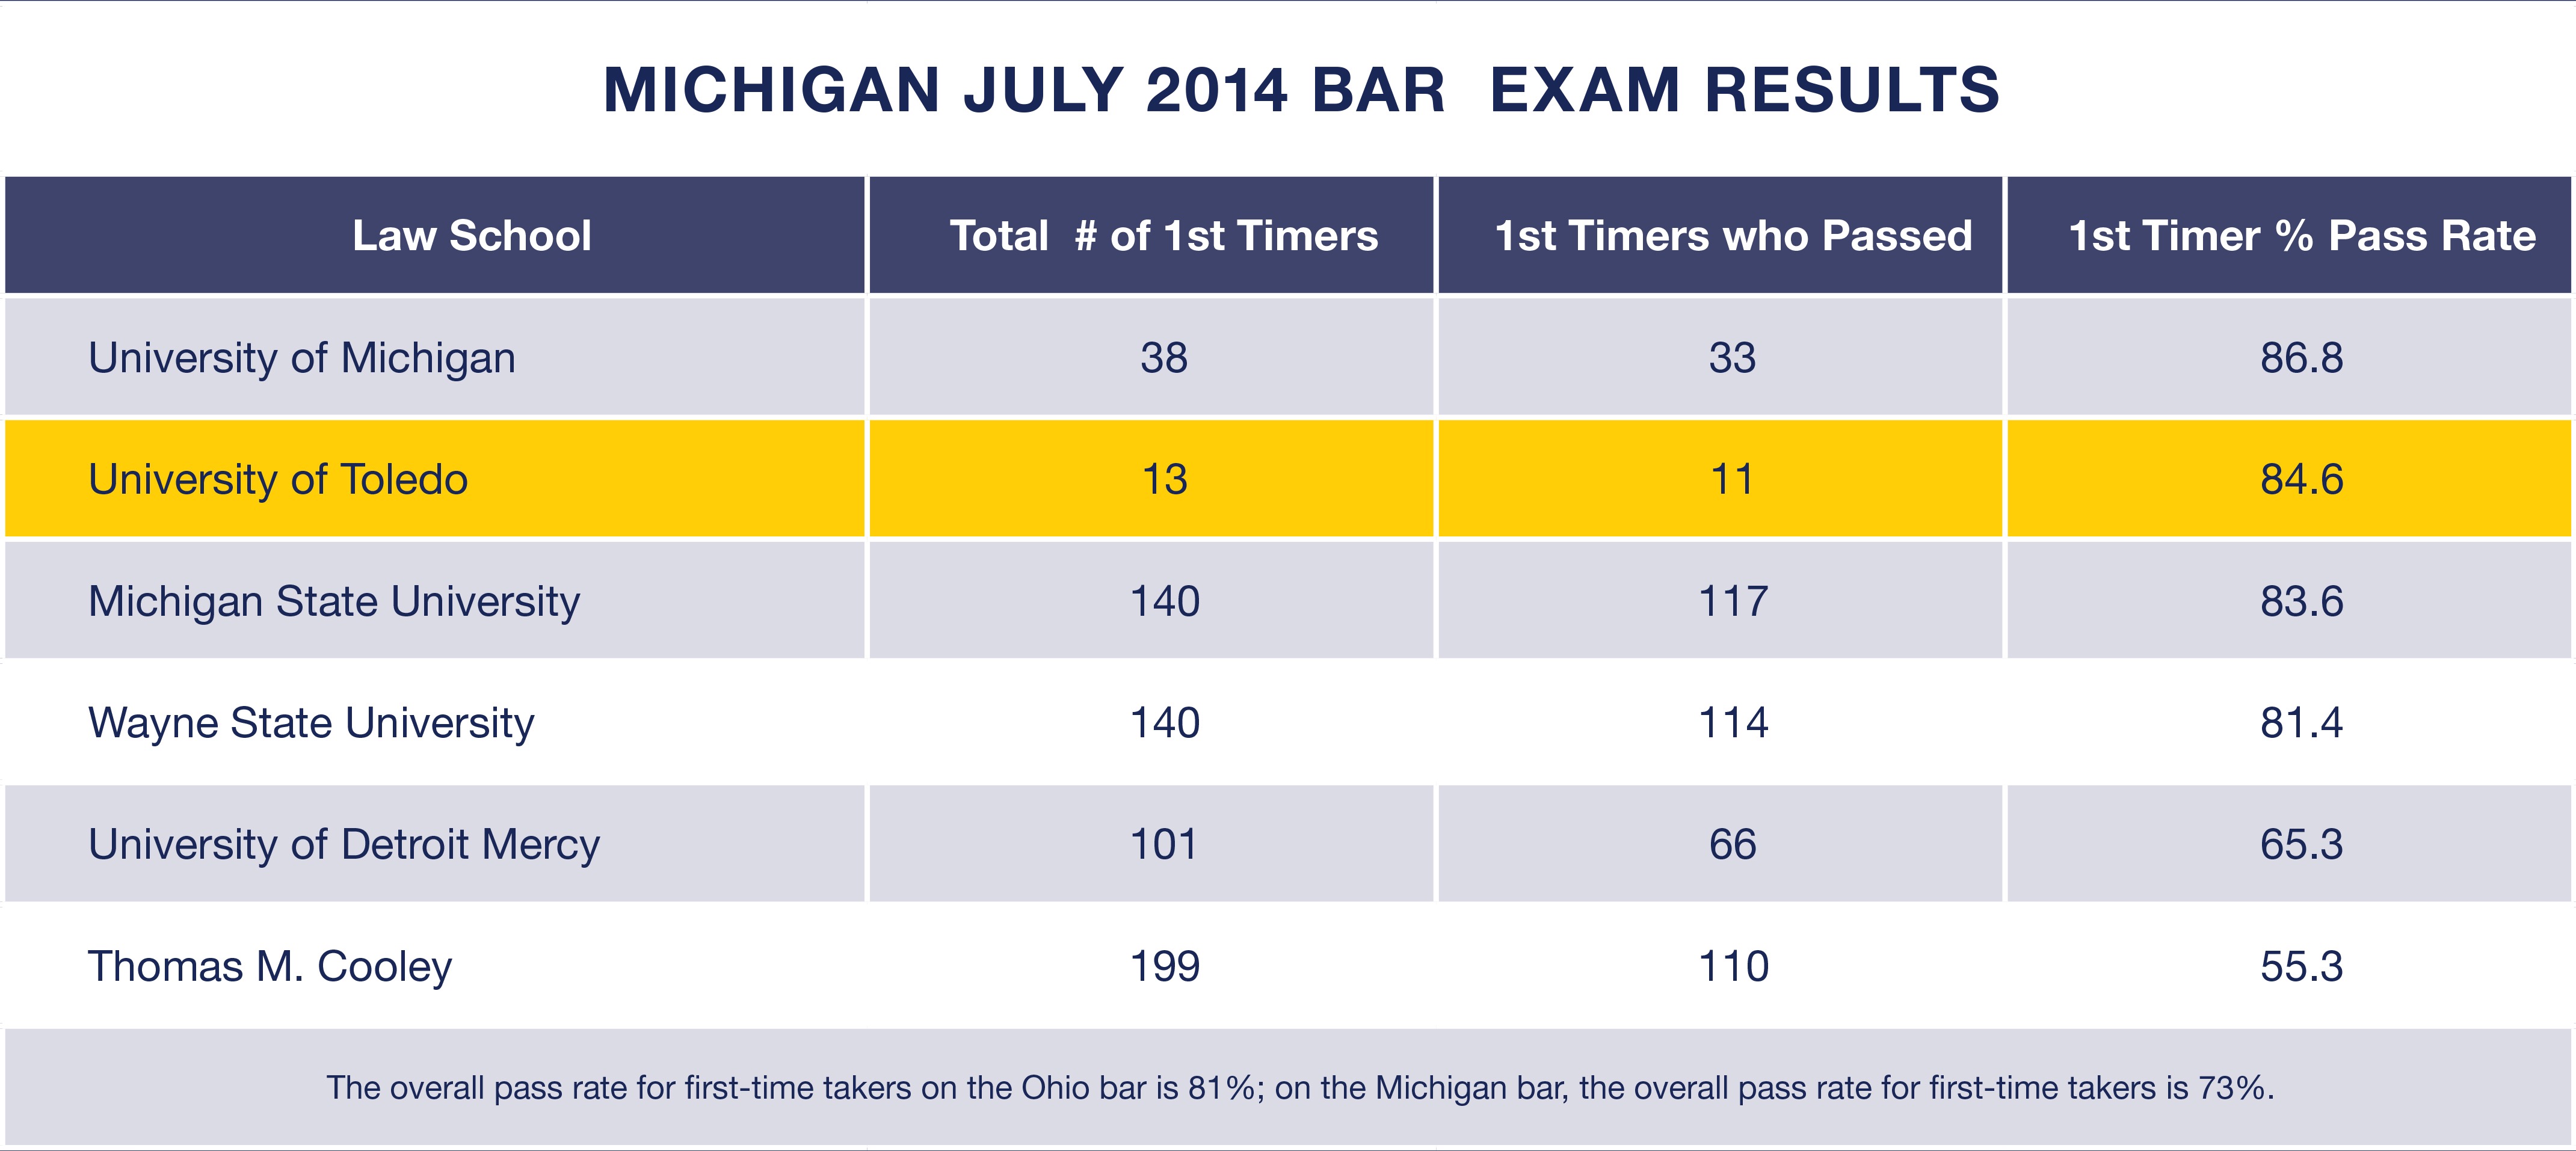 Michigan July 2014 Bar Exam Results